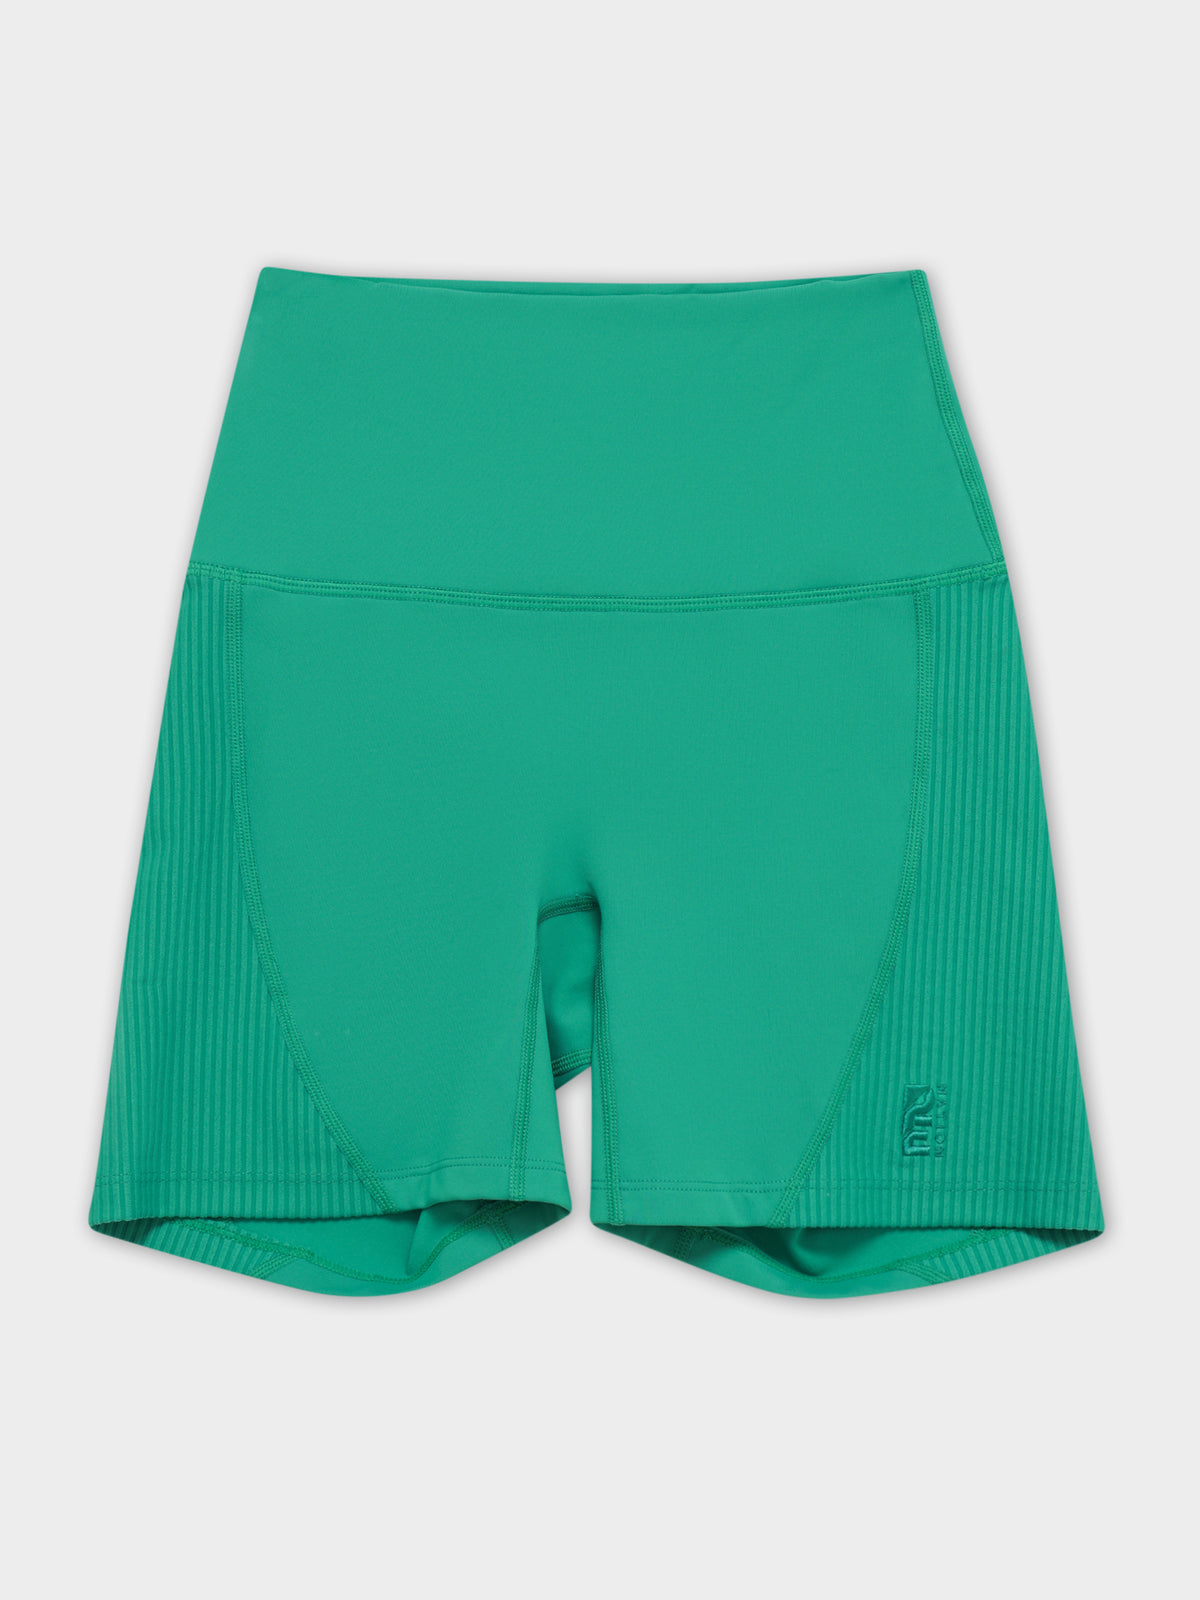 Free Play Bike Shorts in Golf Green